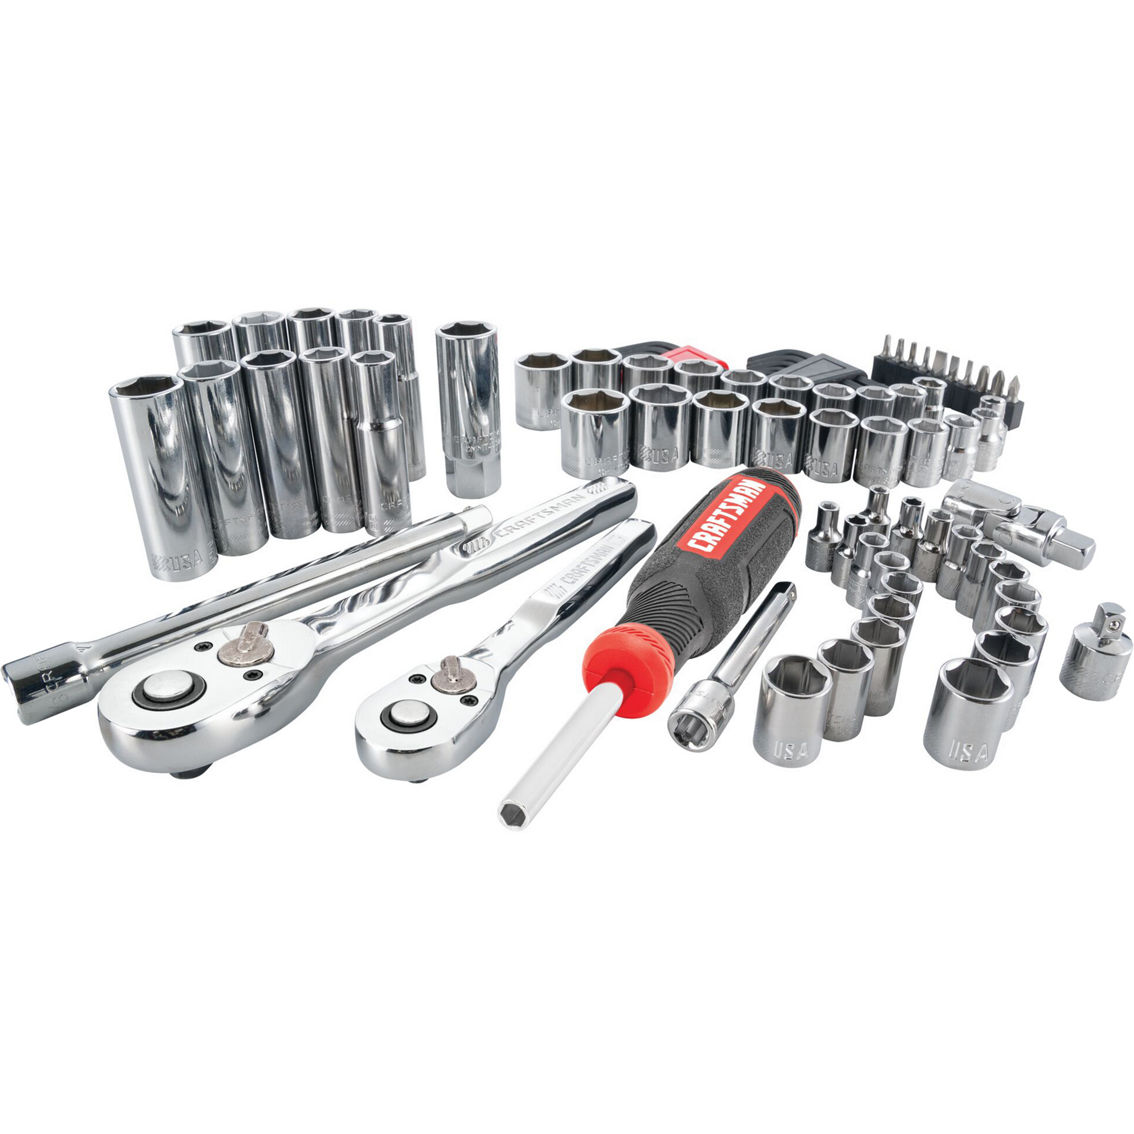 Craftsman 88 Pc. Mechanics Tool Set | Hand Tools | Patio, Garden